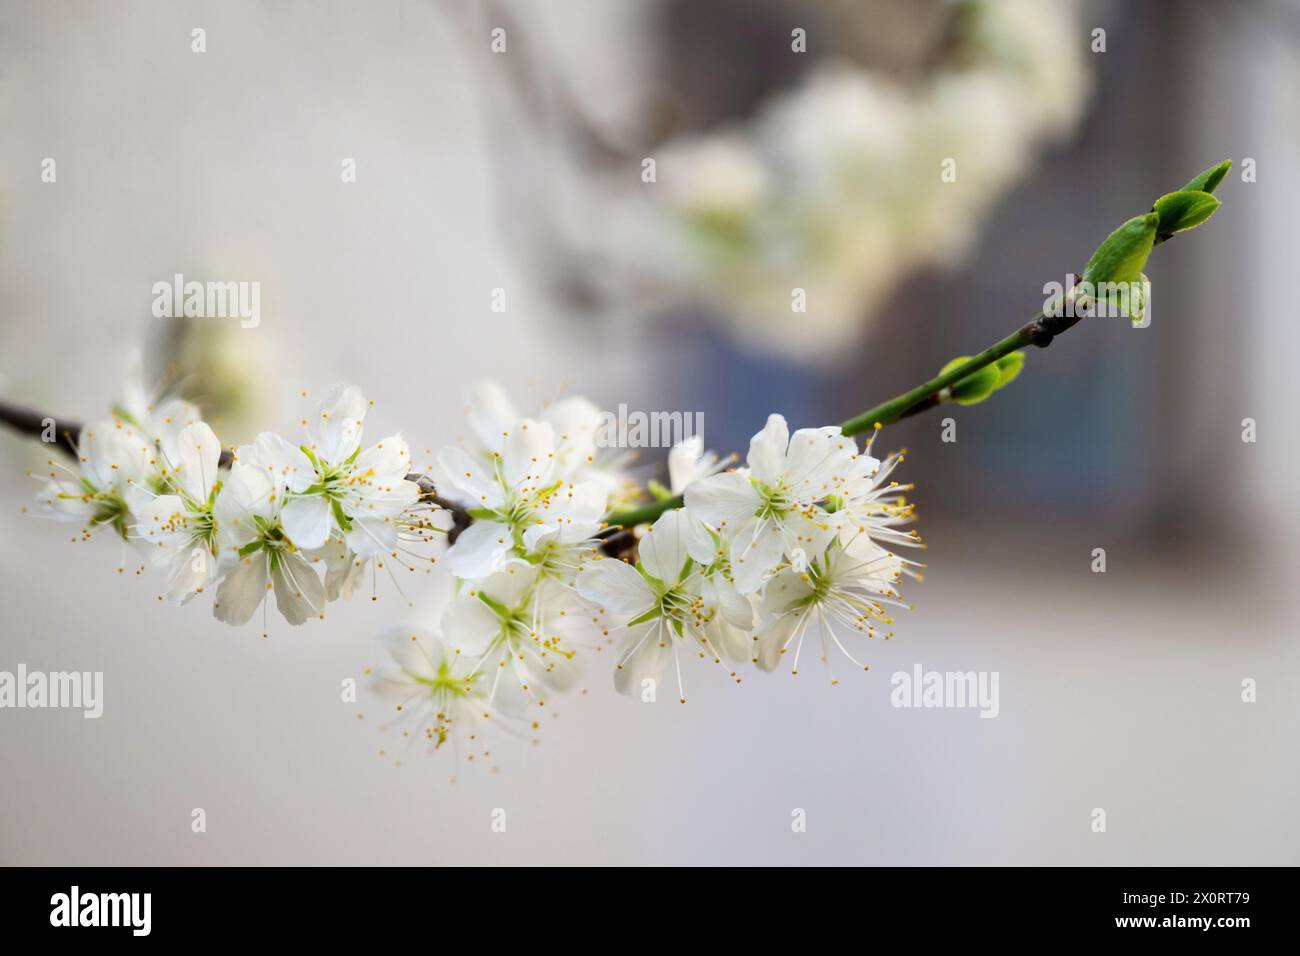 Bloooming apple flower on twig, blurred window on background. Springtime. Stock Photo